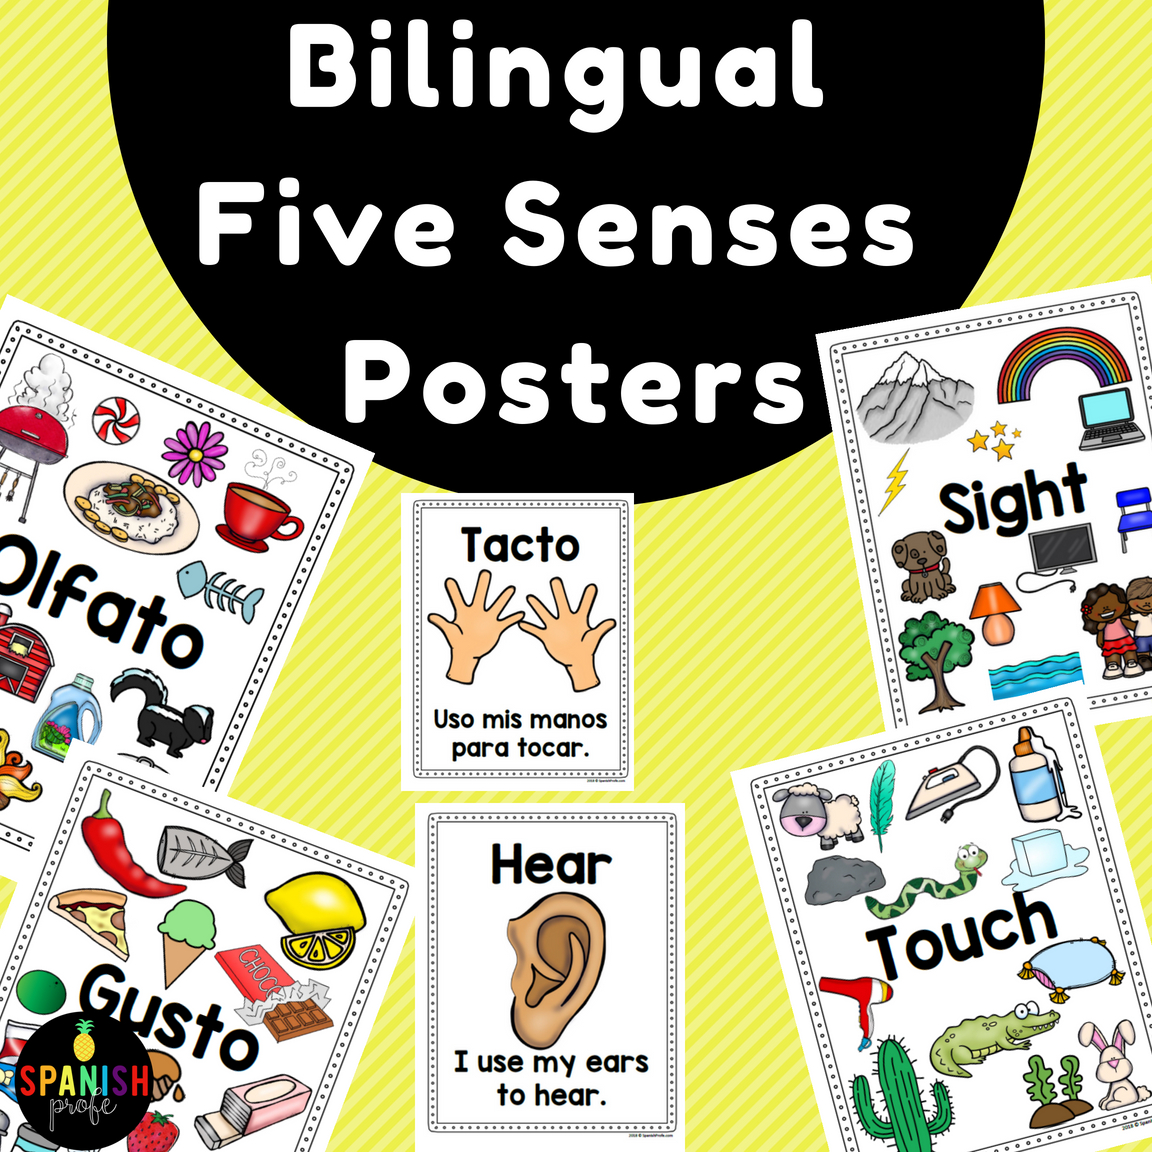 Bilingual Five Senses Posters English And Spanish Carteles Cinco